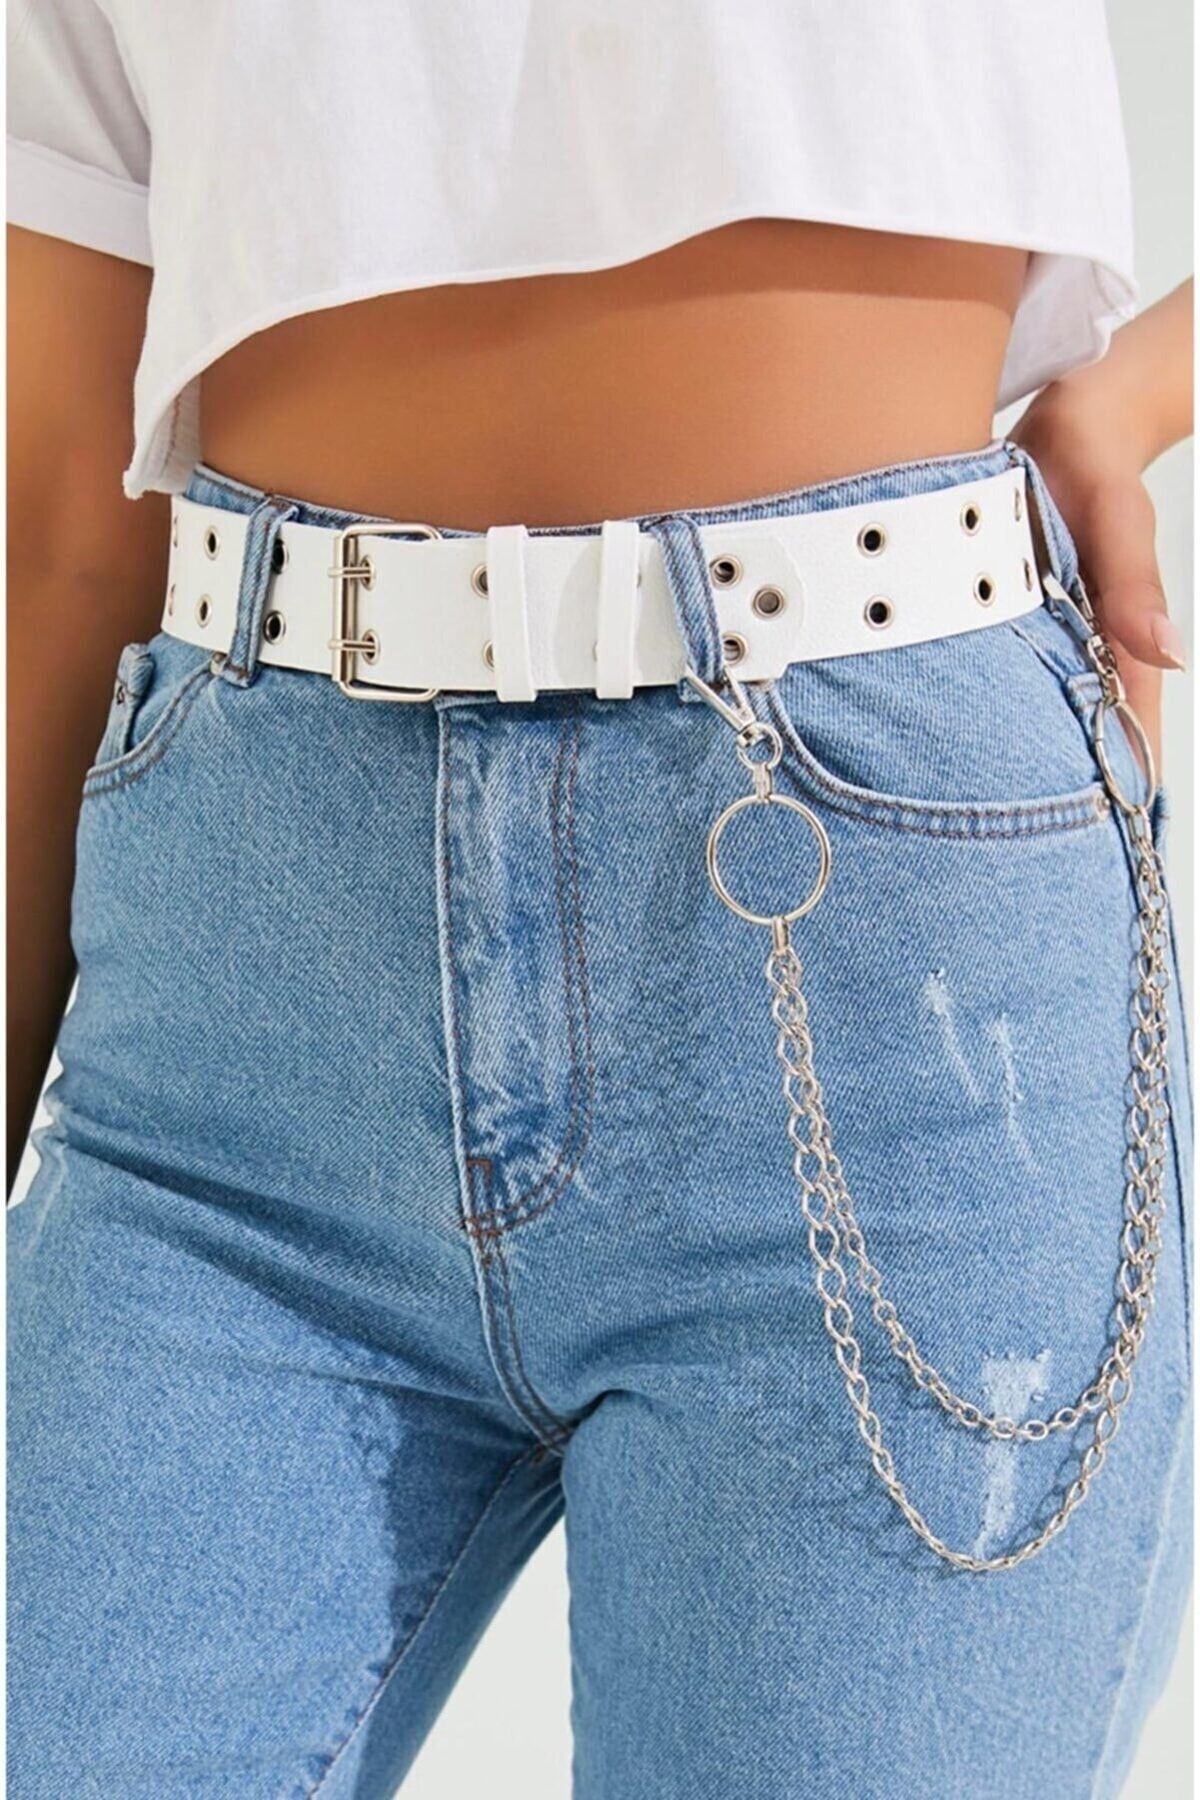 Buy Silver Chain Belt Women Chain Belt Waist Belt With Chain 1.5 Cm Chain  Belt for Jeans Metal Chain Belt Womens Leather Belt Online in India - Etsy